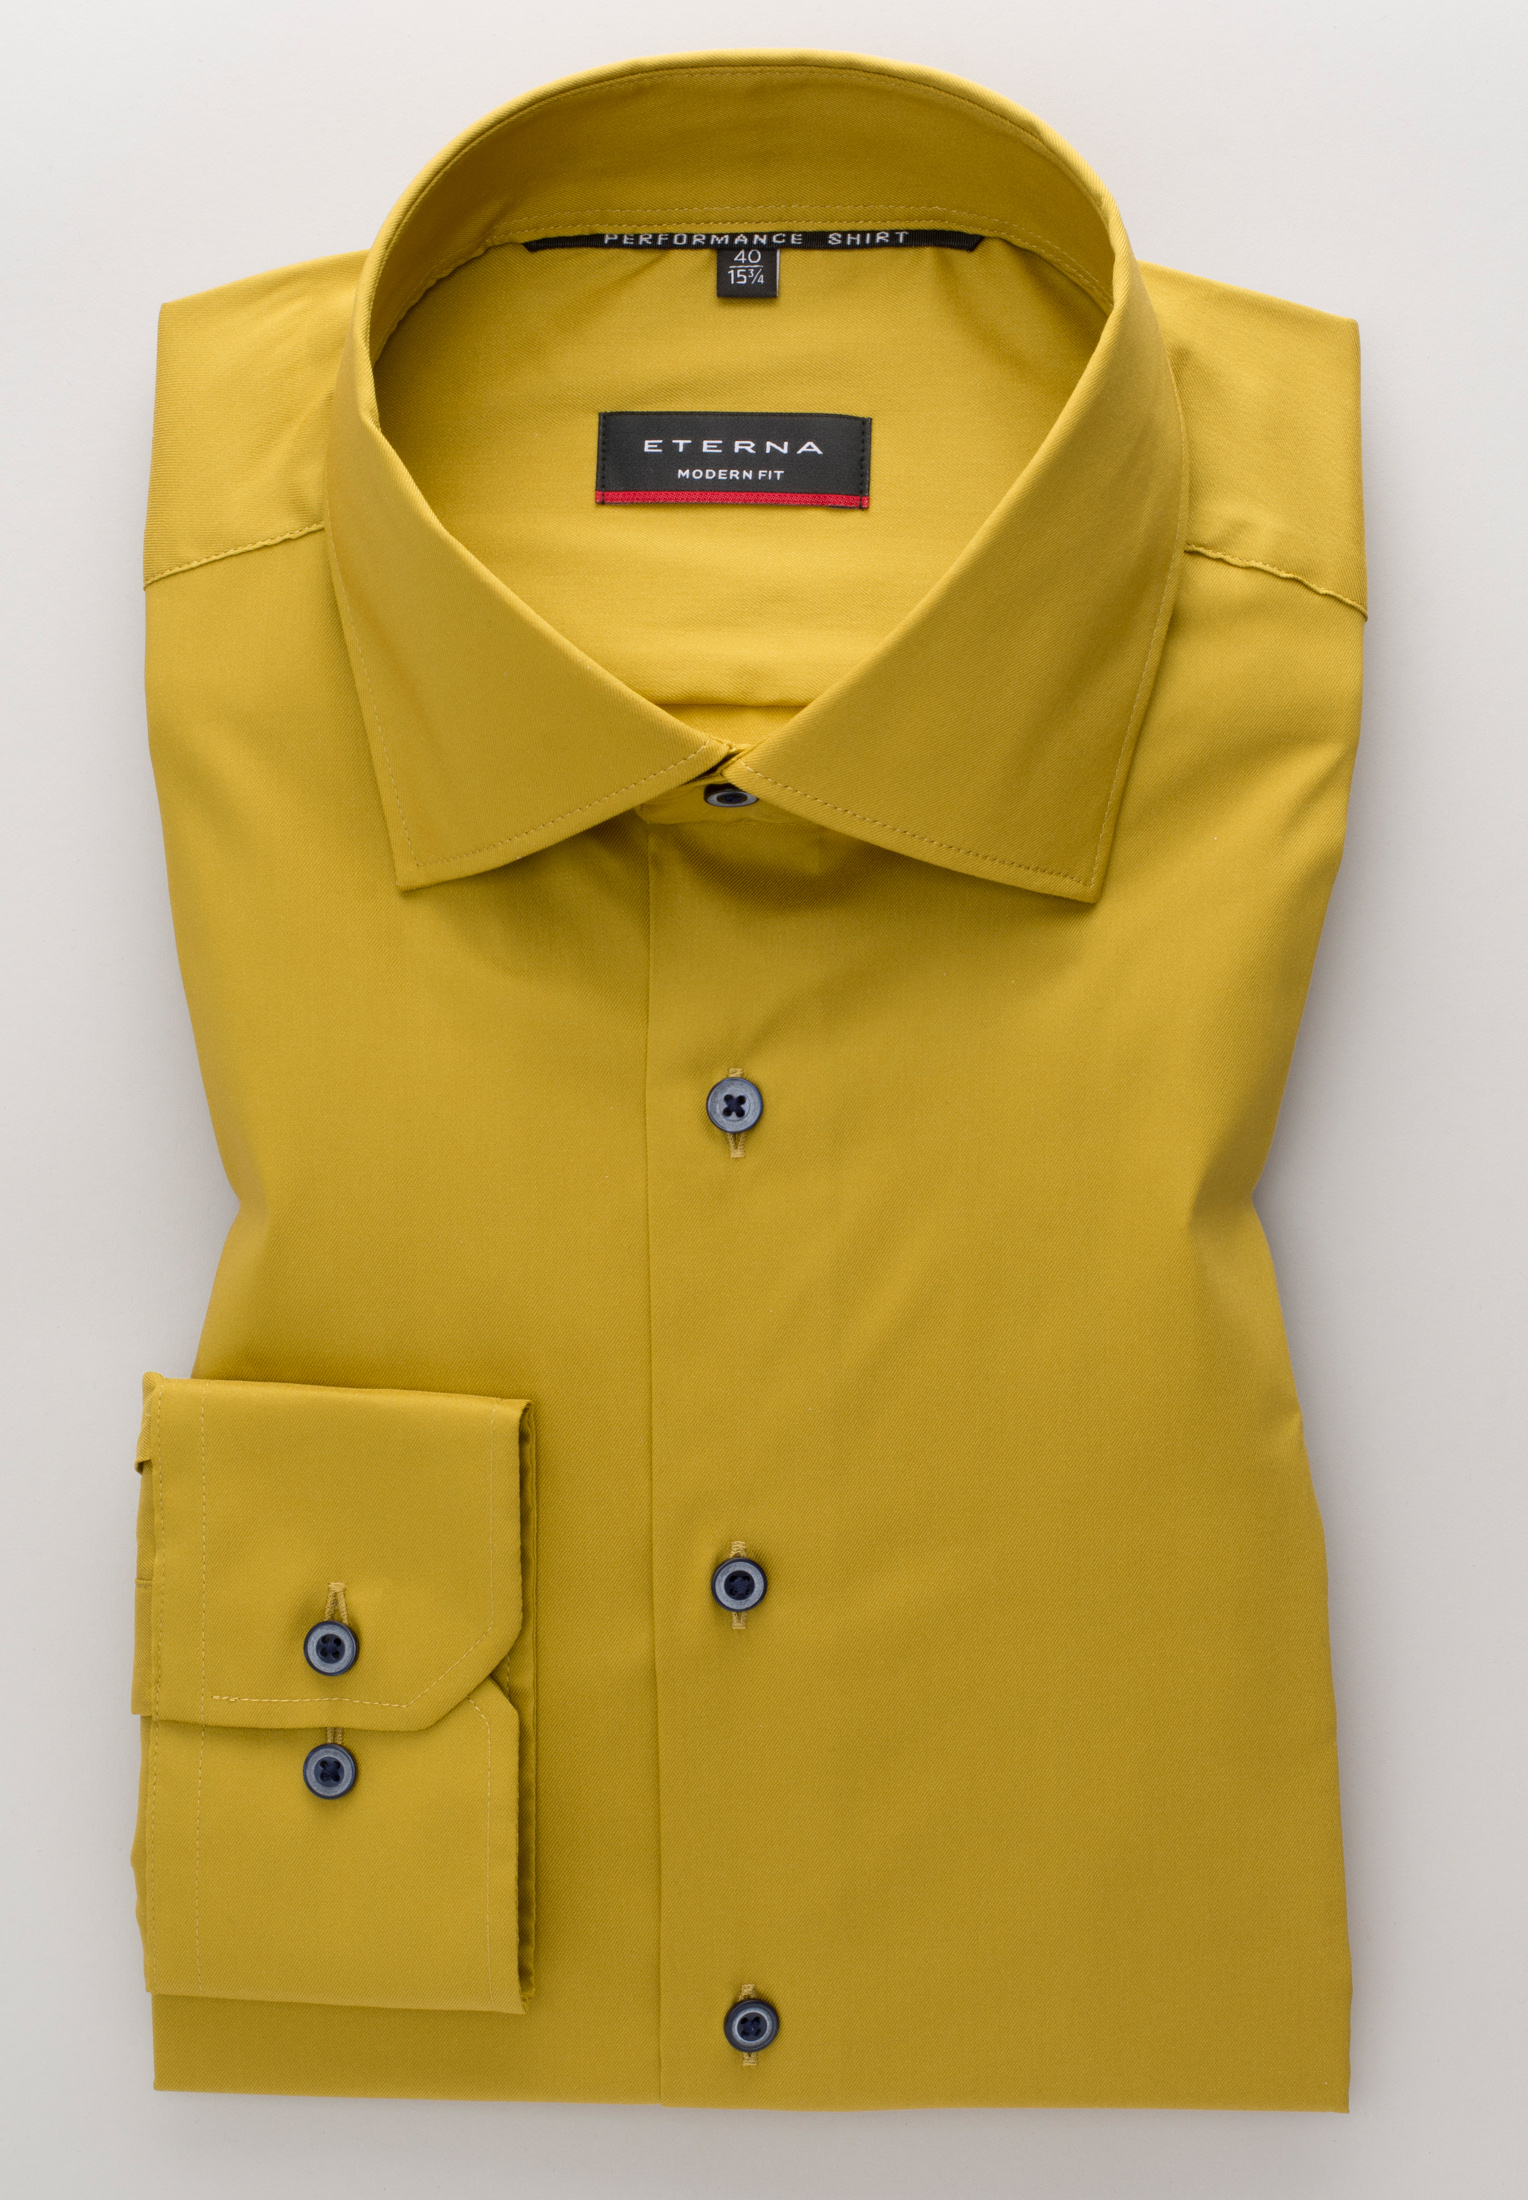 MODERN FIT Performance Shirt 40 | | | | gelb 1SH02224-07-01-40-1/1 gelb unifarben Langarm in